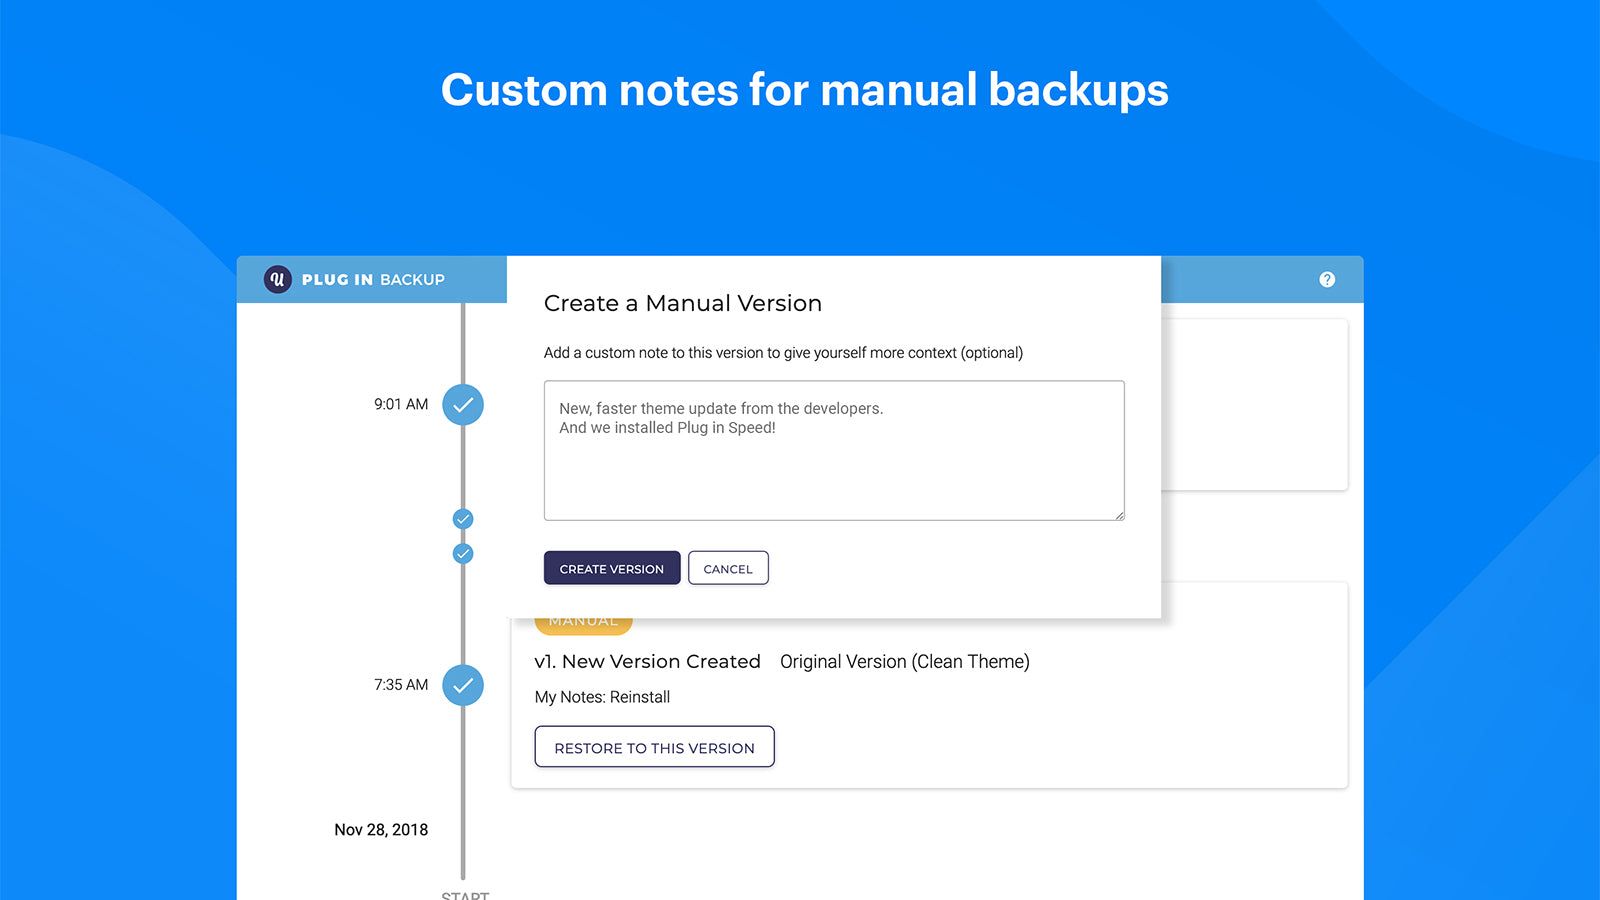 Create a new version and add a helpful custom note